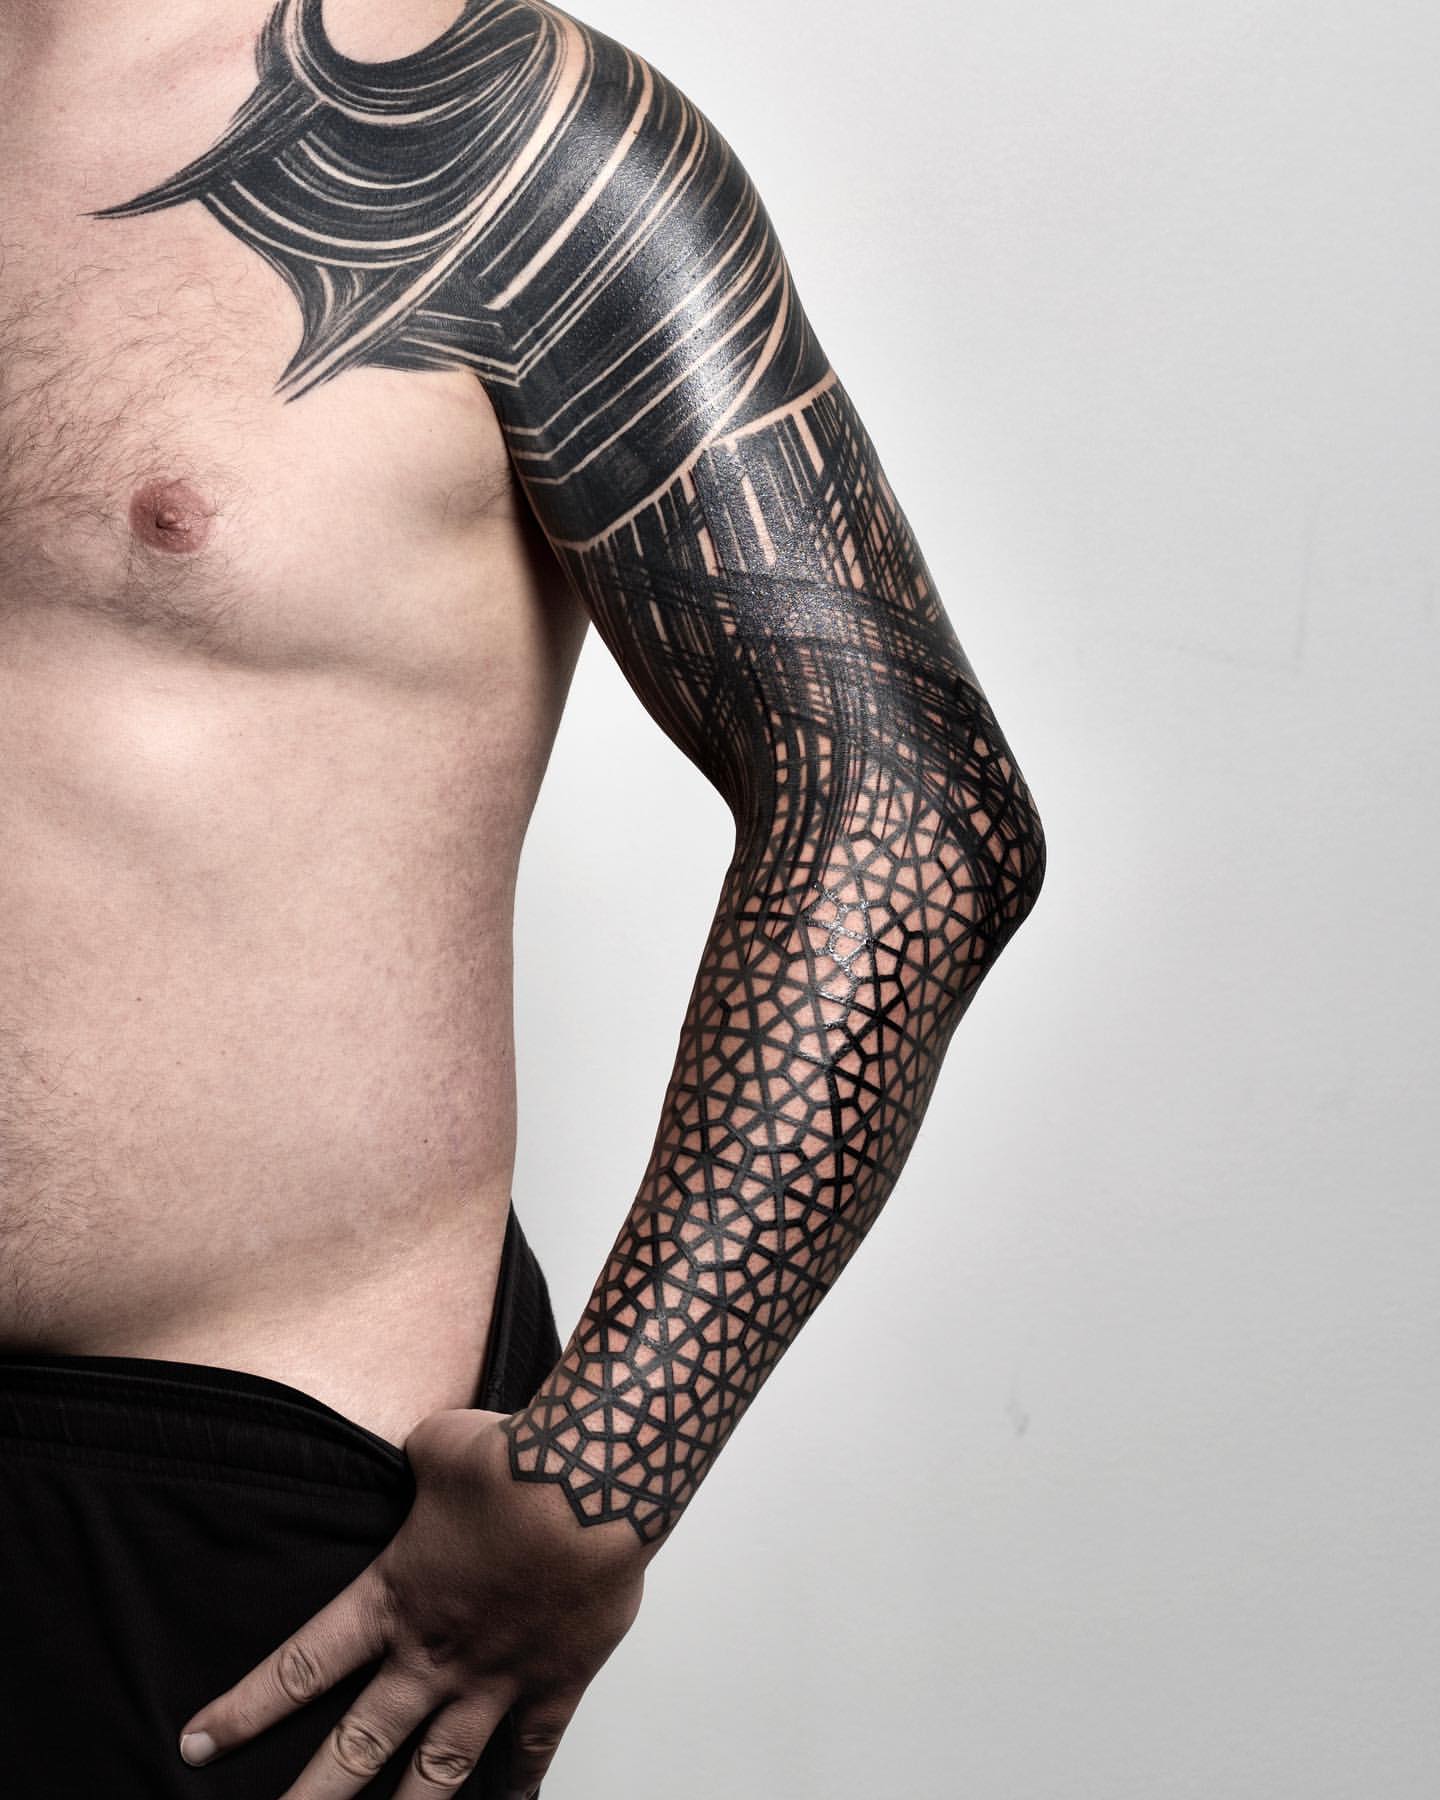 Geometric Tattoos for Men 1